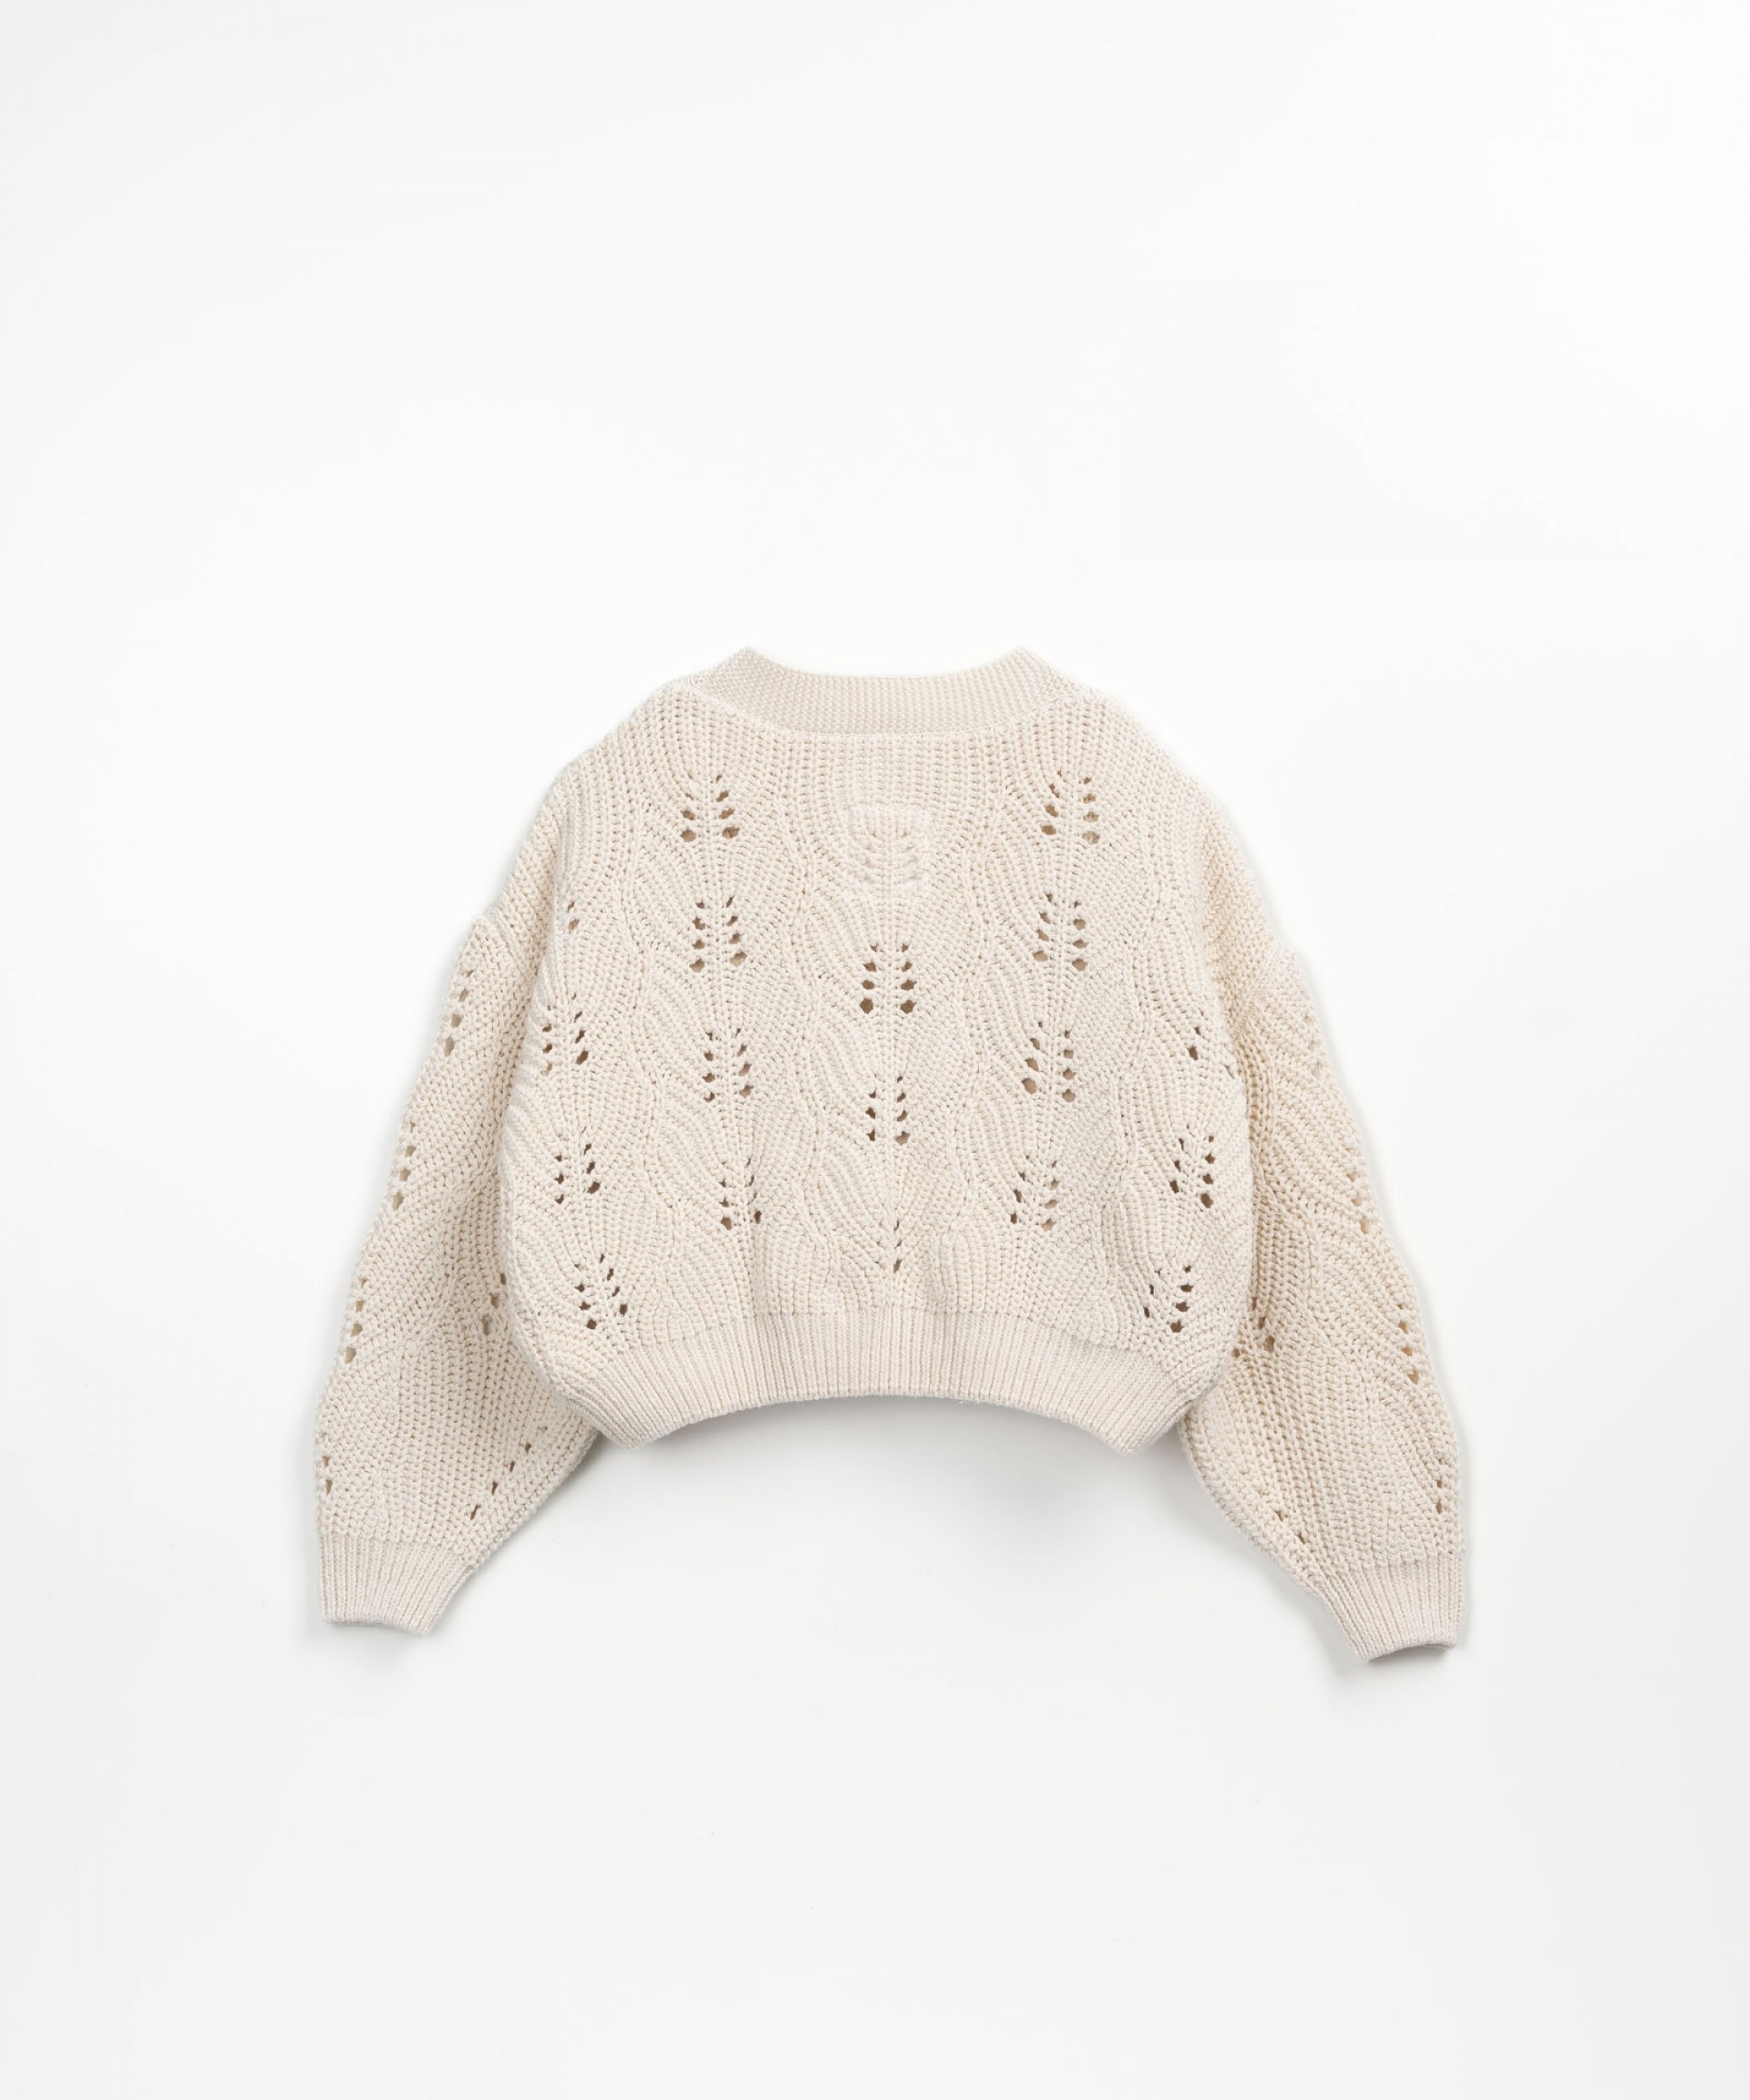 Cardigan en tricot avec des fibres recycles | Textile Art